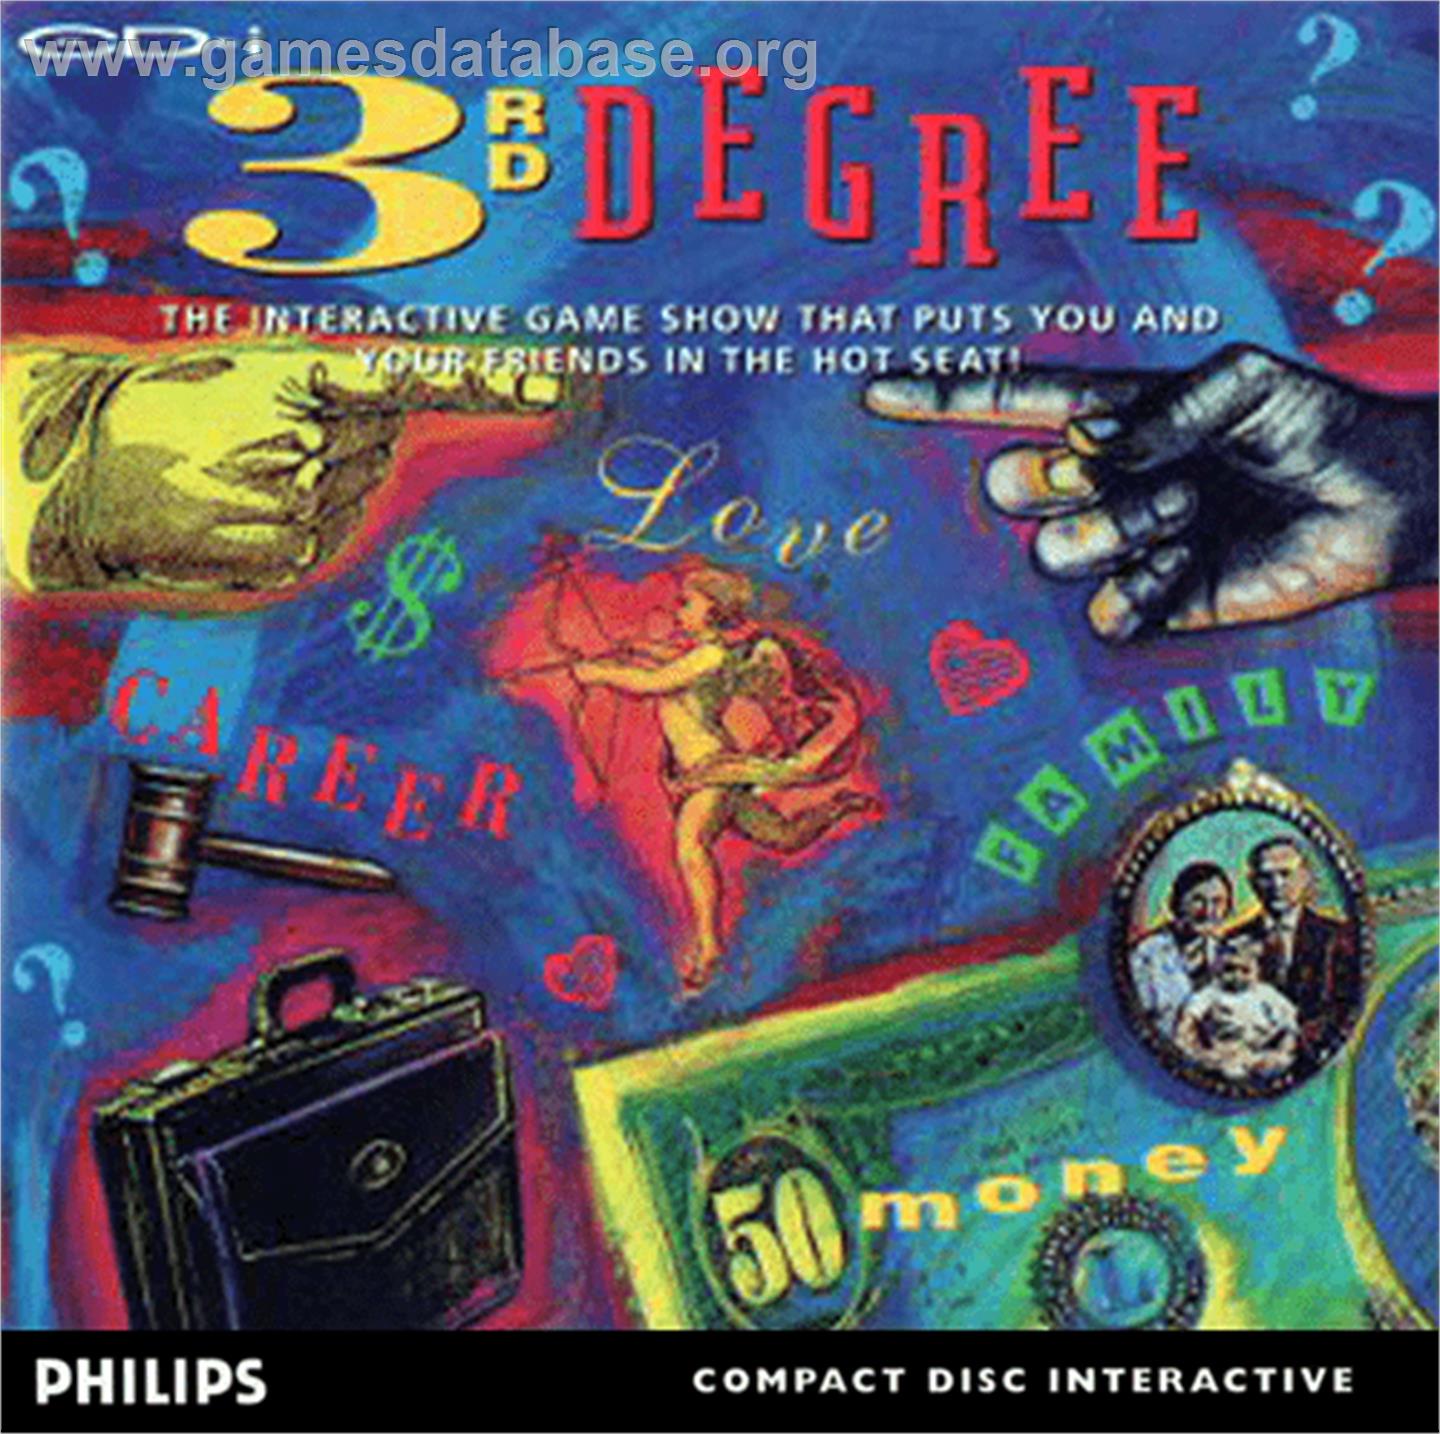 3rd Degree - Philips CD-i - Artwork - Box